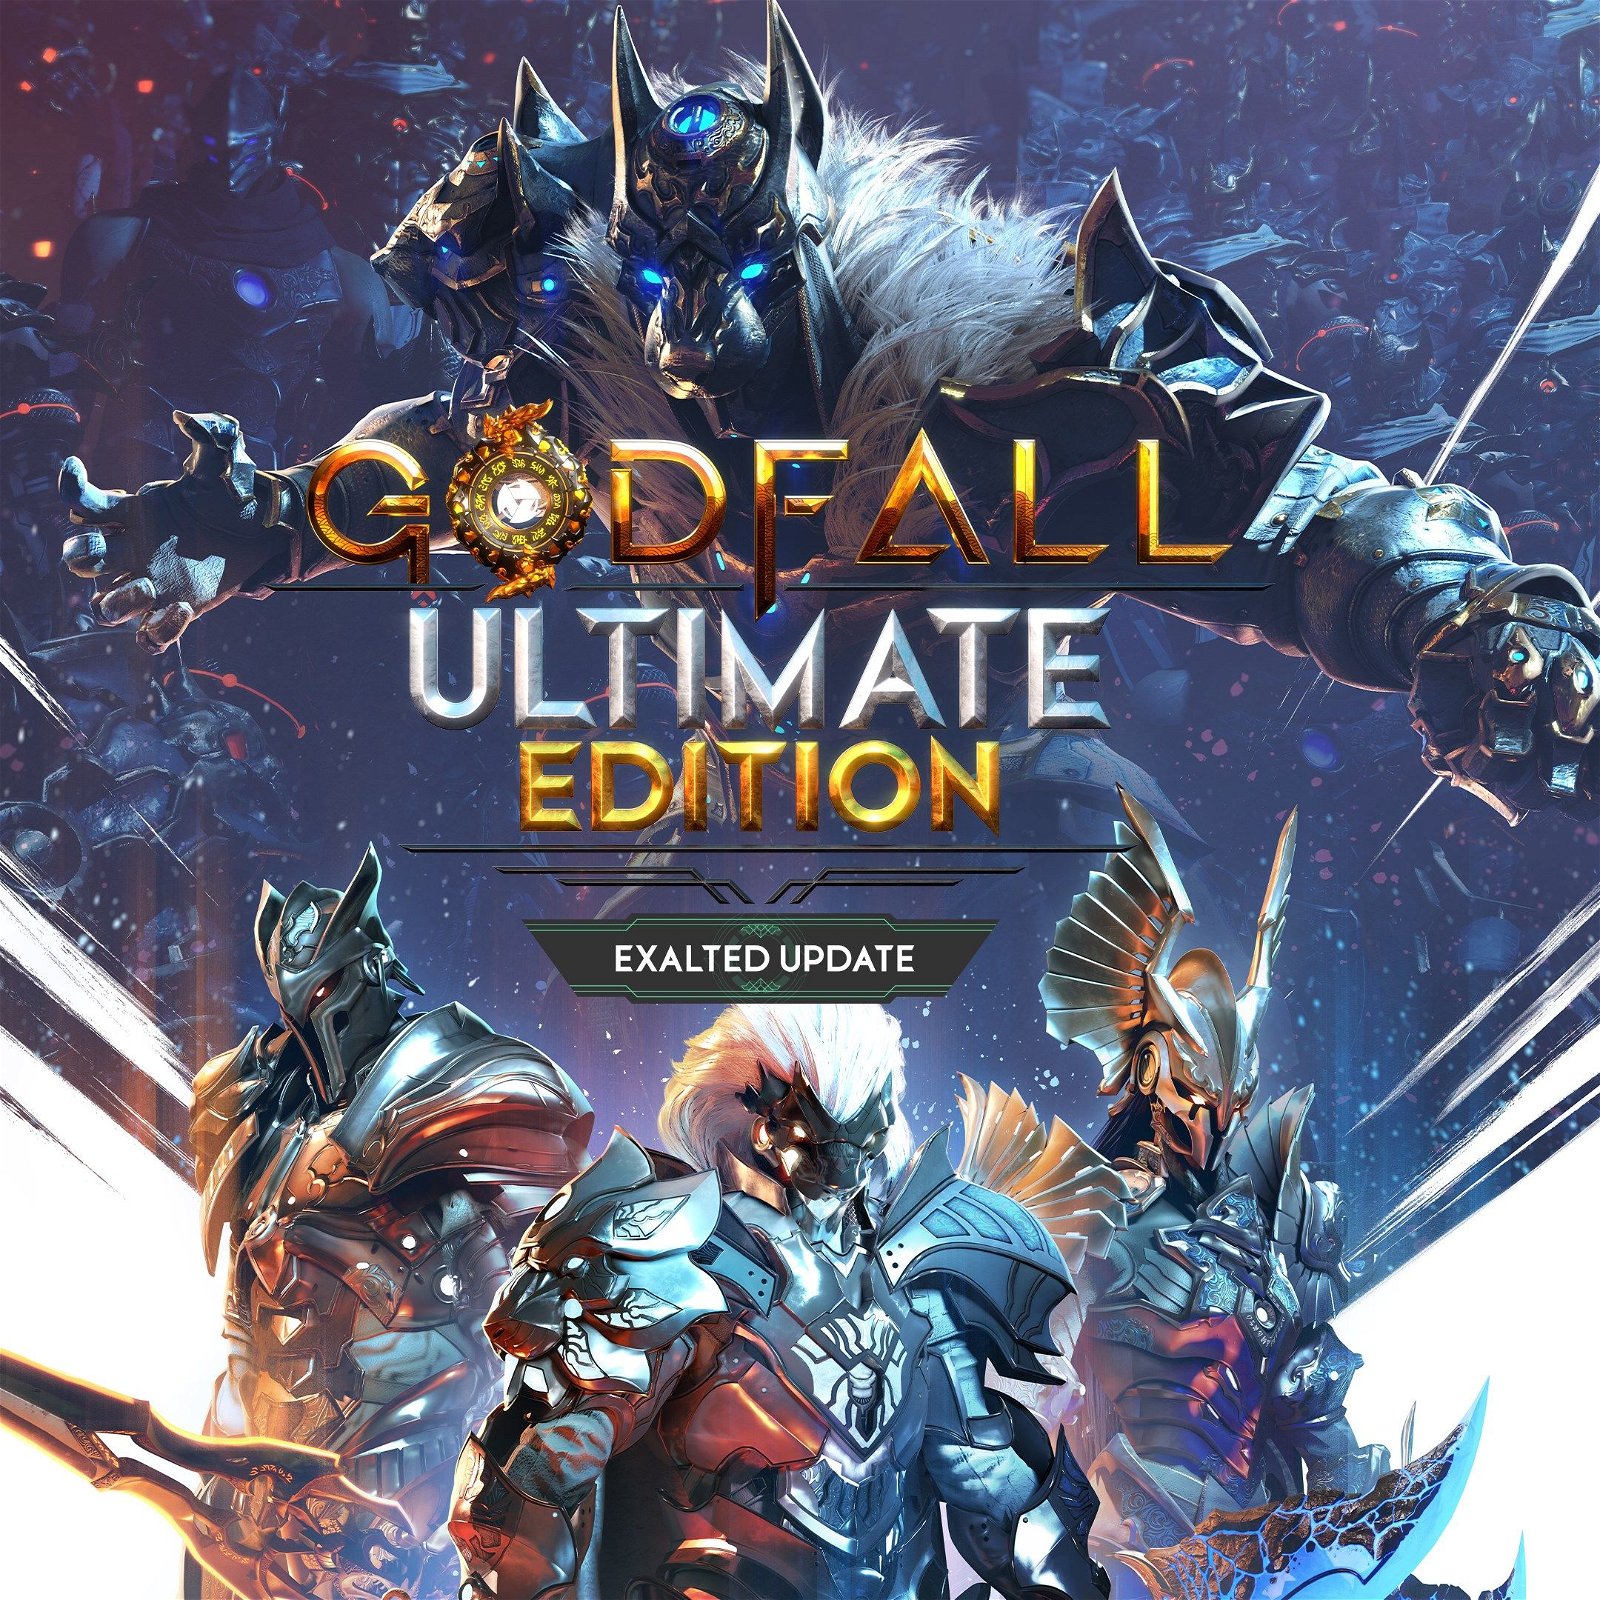 Image of Godfall Ultimate Edition